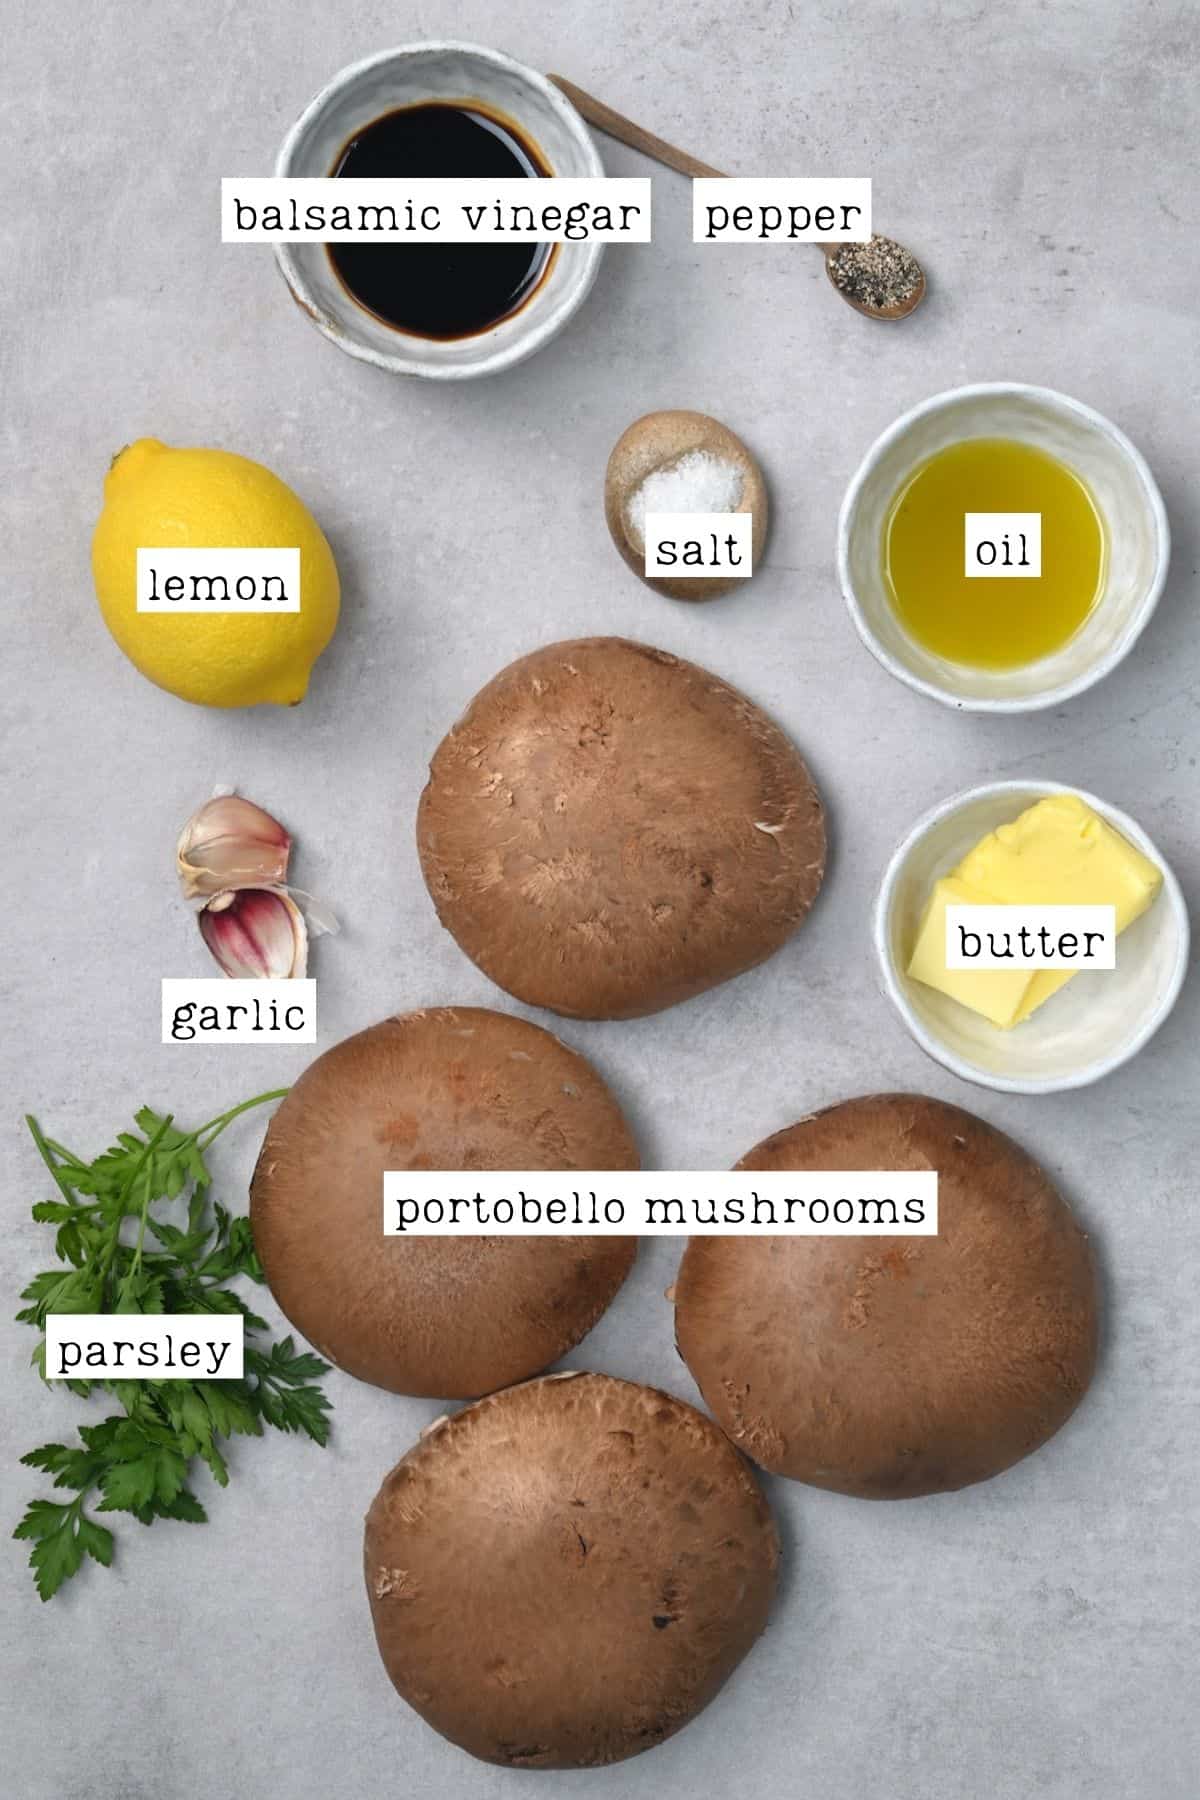 Ingredients for grilled portobello mushrooms